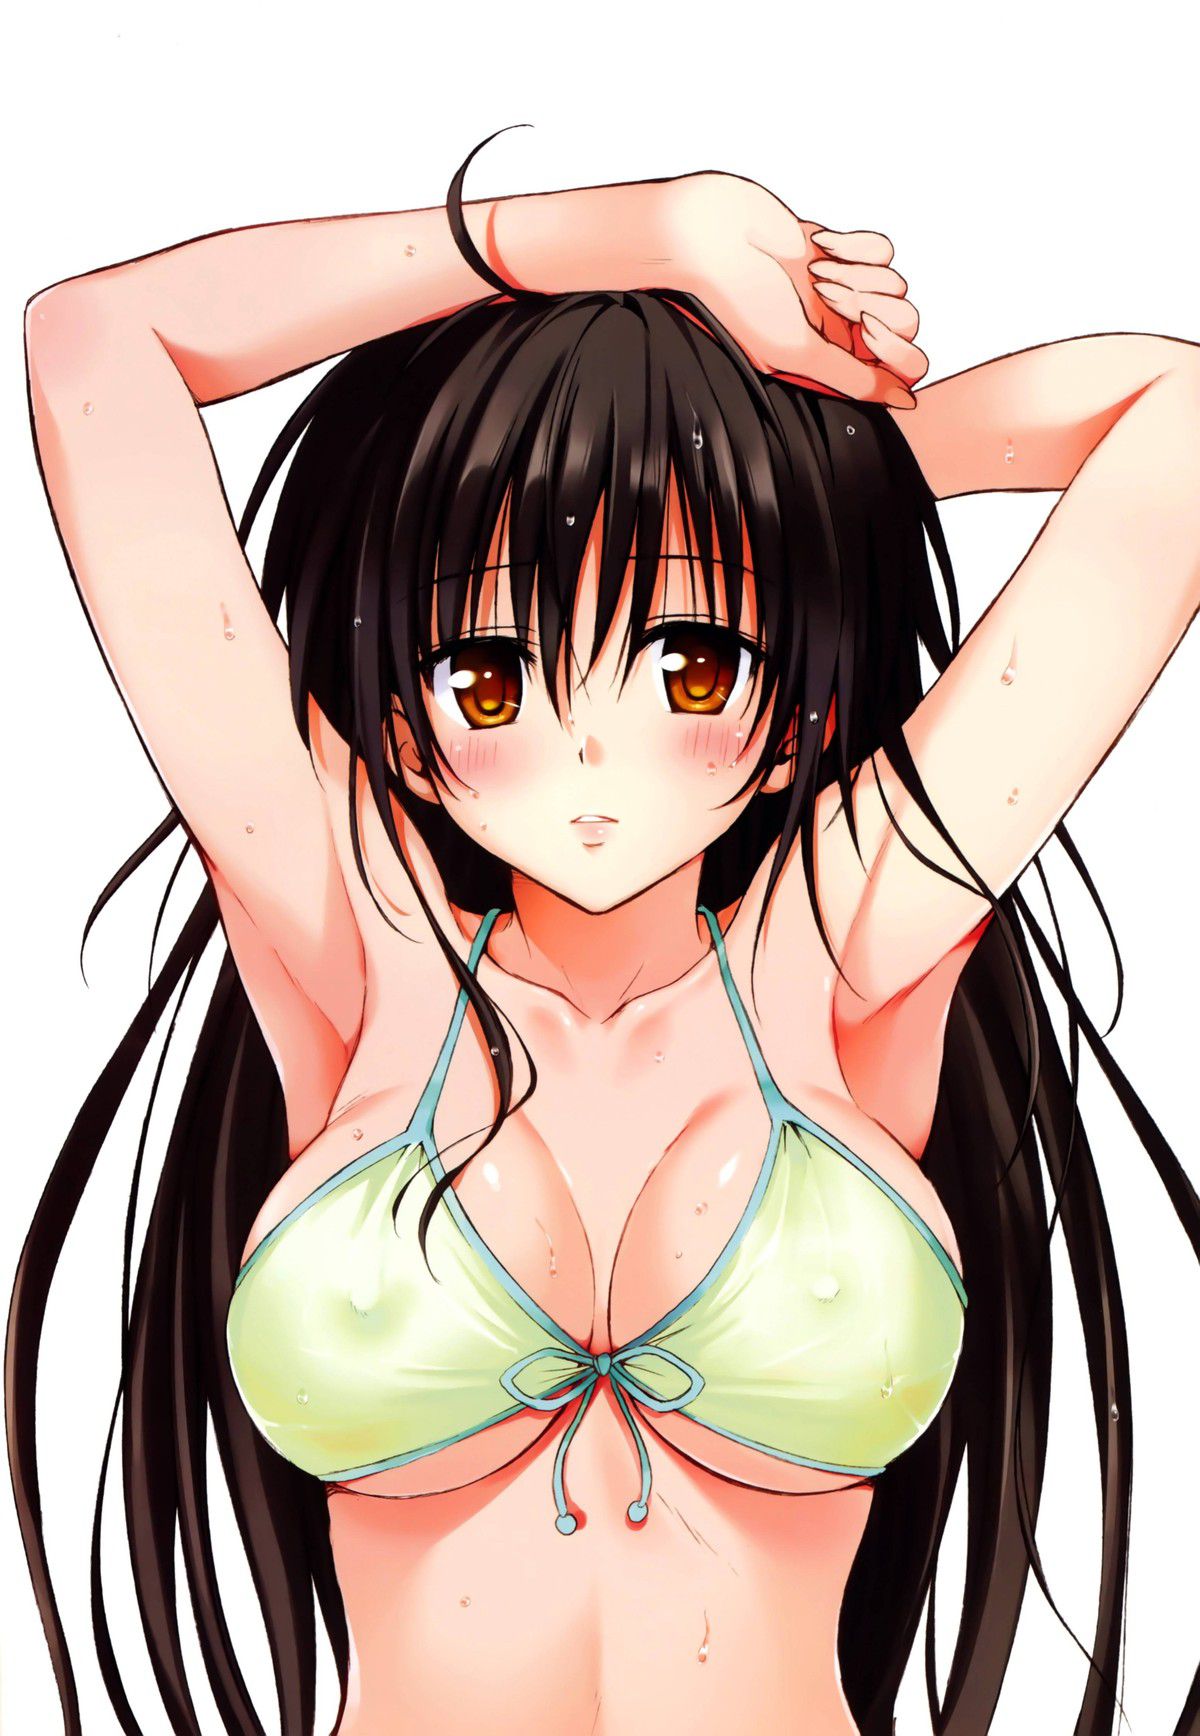 [Image] [-] Kotegawa Yui is the most erotic too legendary wwwwwww 27